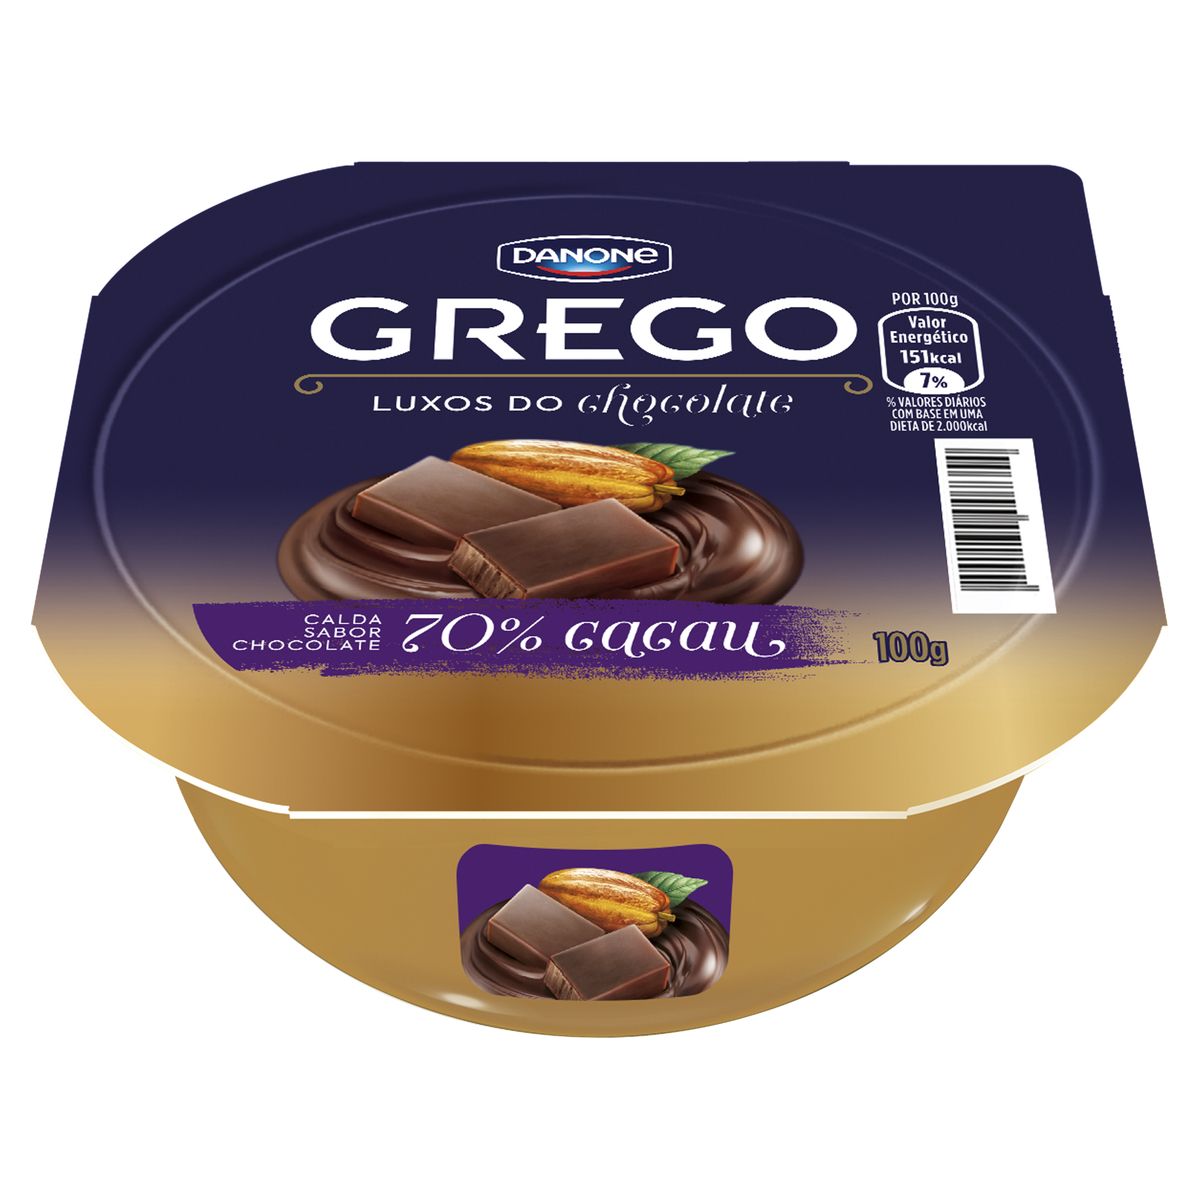 Iogurte Grego Calda Chocolate 70% Cacau Danone Luxos do Chocolate Pote 100g